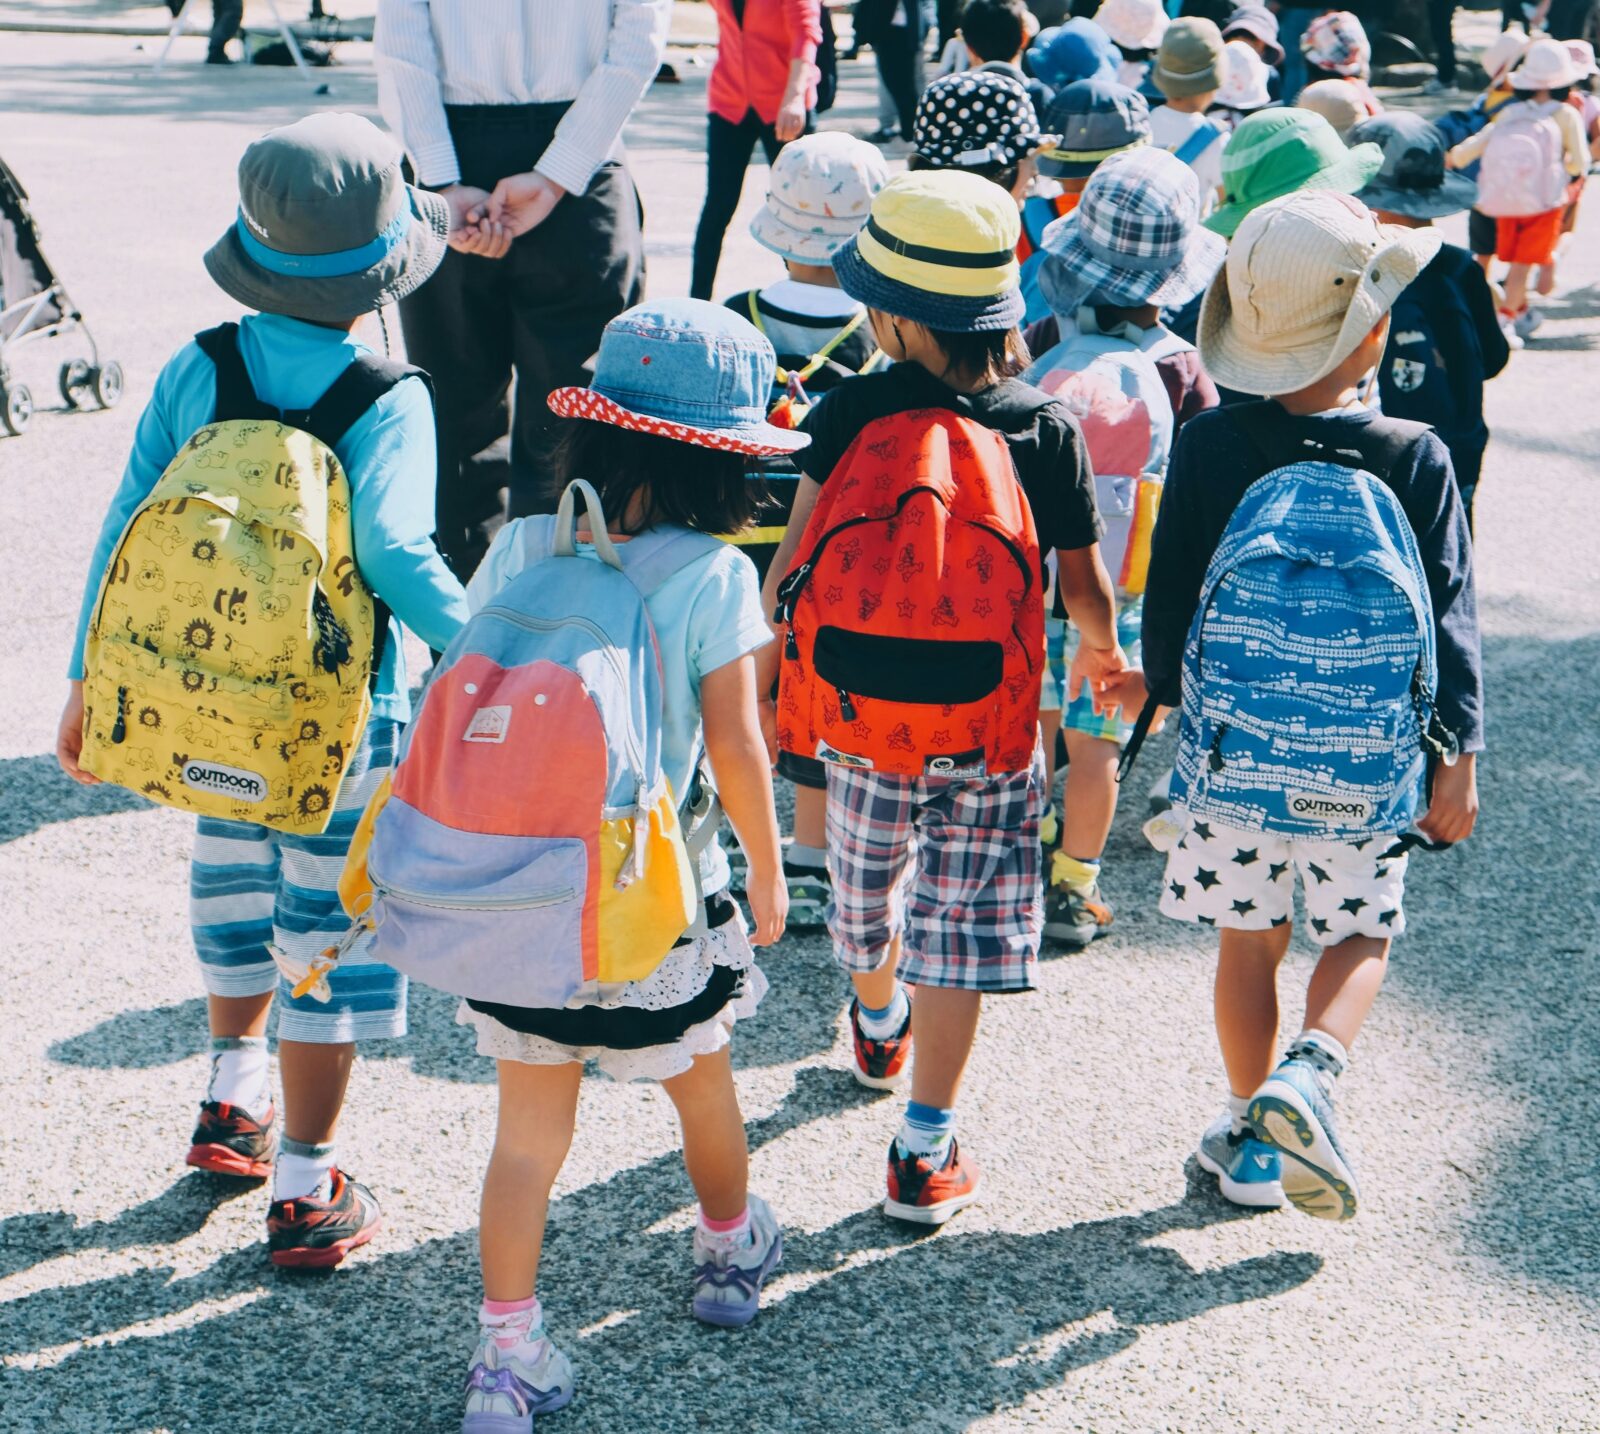 Children with backpacks walking ahead.